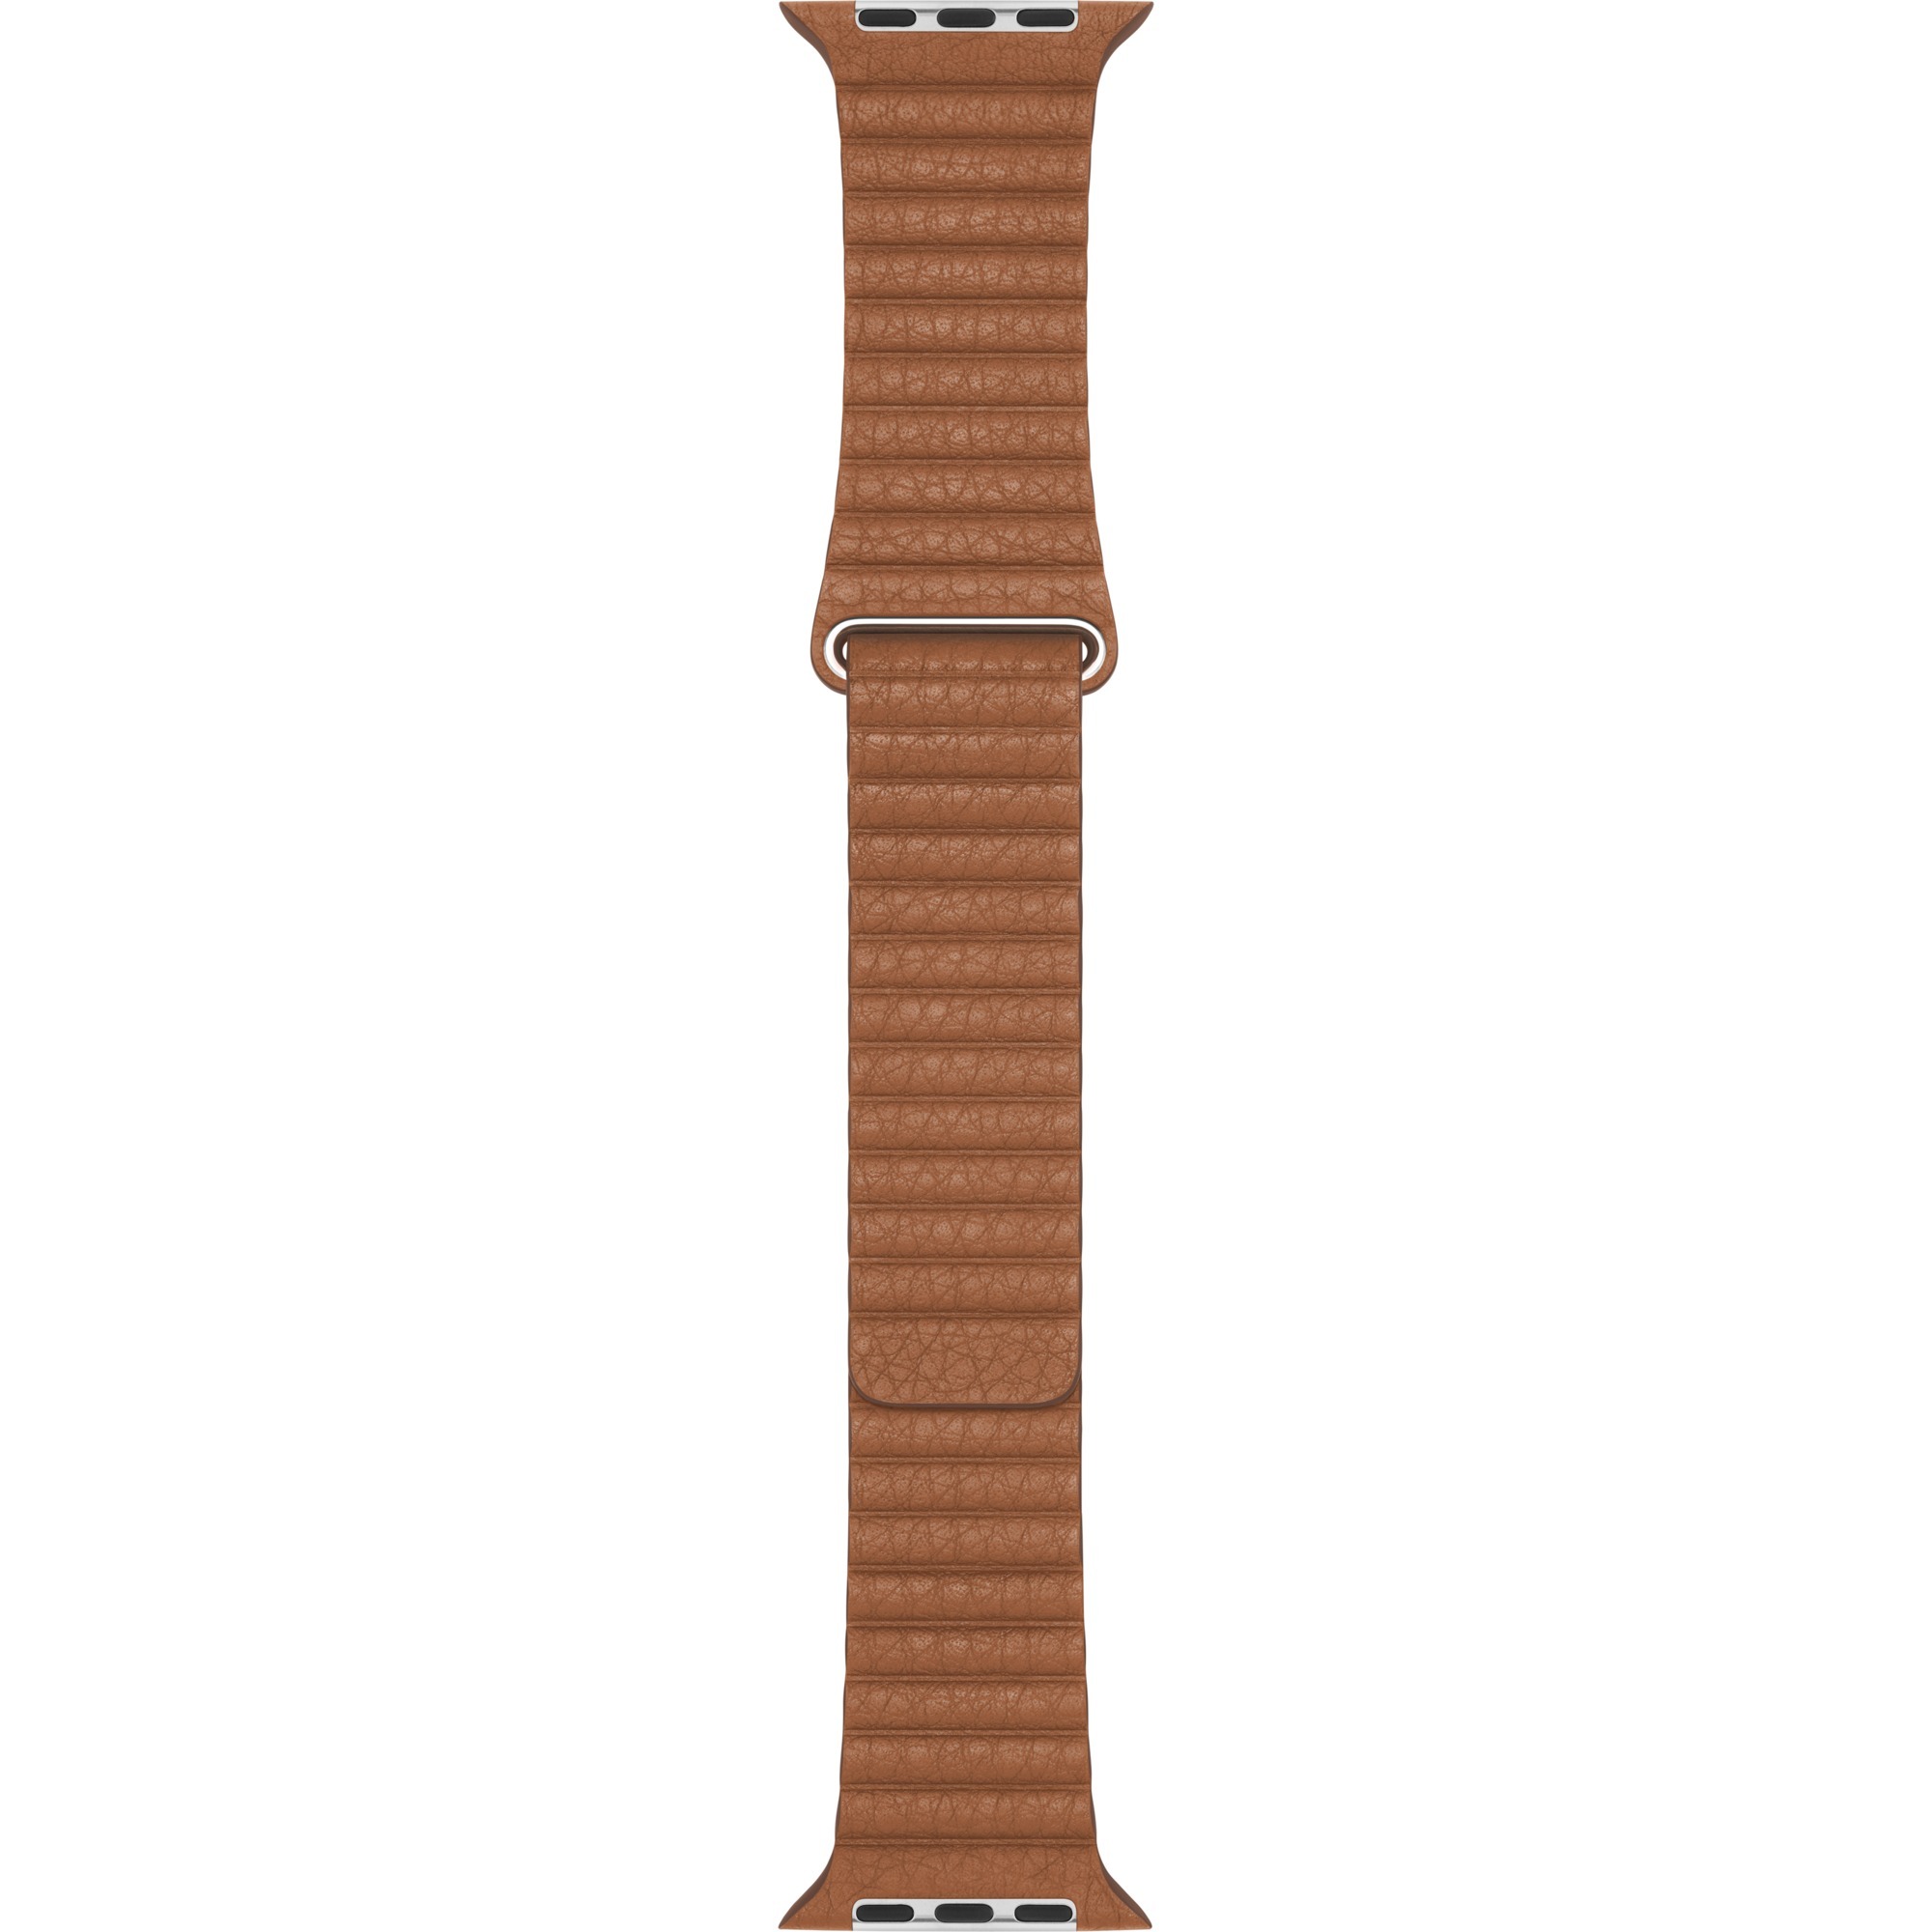 Apple Mxaf2zm A Smartwatch Accessory Band Brown Leather Wrist Watch Brown Band Brown Apple Apple Watch 42mm Apple Watch 44mm Leather 1 Pc S